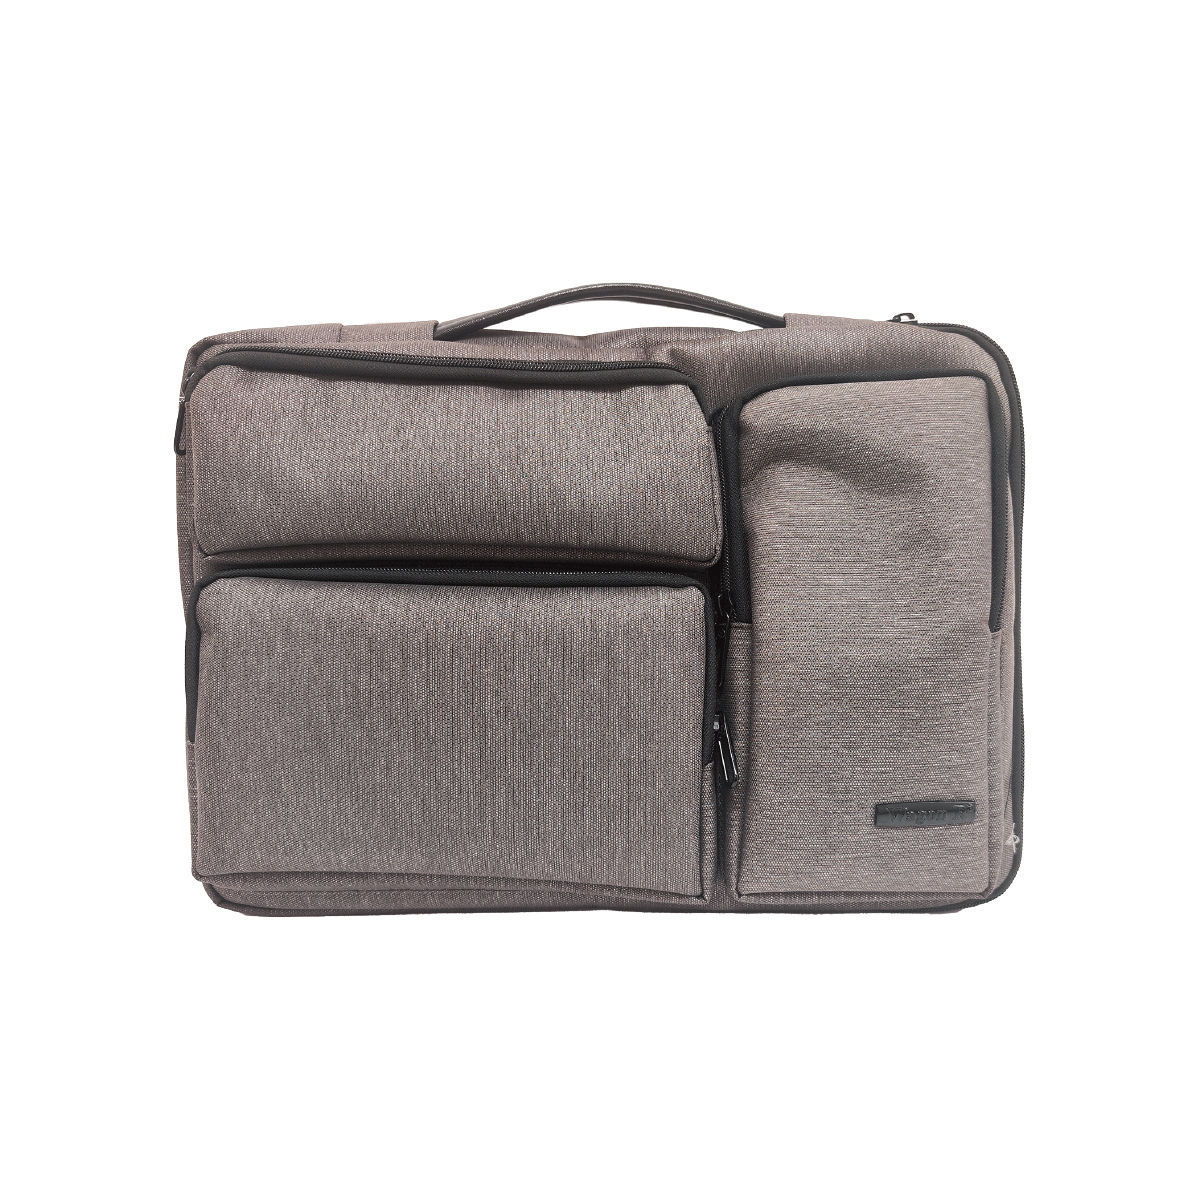 Wagon-R Laptop Bag 228-2 14.5inch